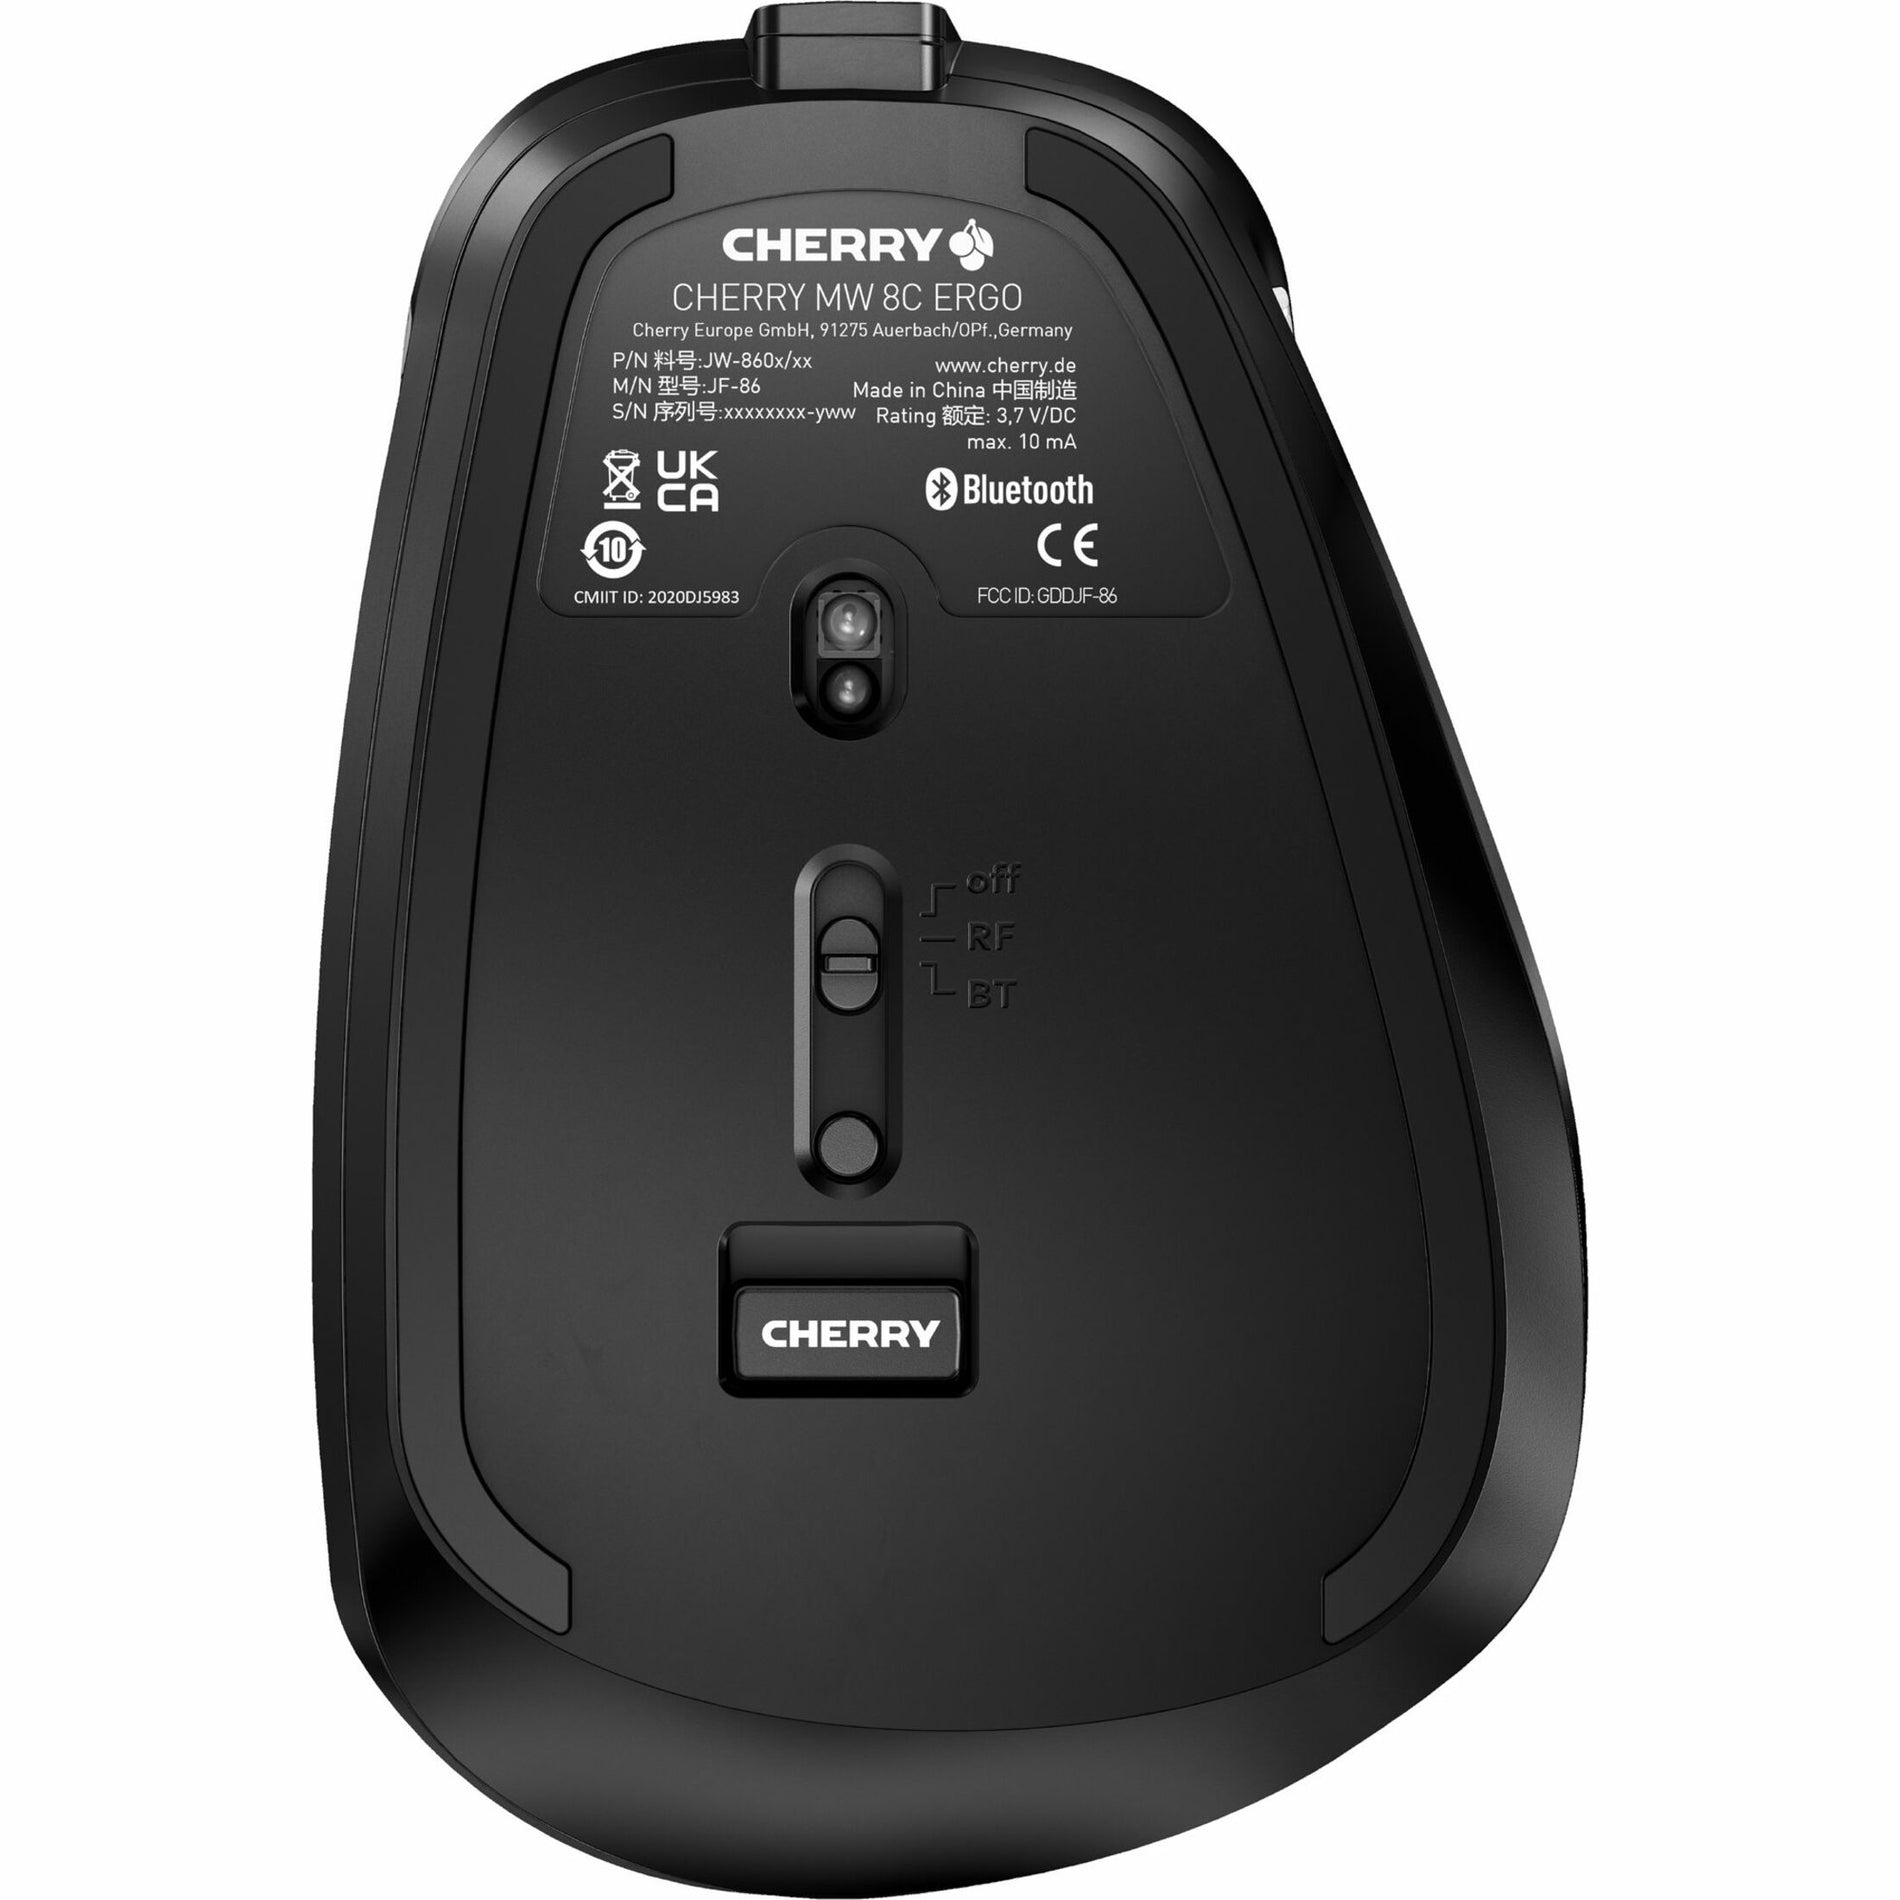 CHERRY JW-8600US MW 8C ERGO Rechargeable Wireless Mouse, Black, Ergonomic Fit, 3200 dpi